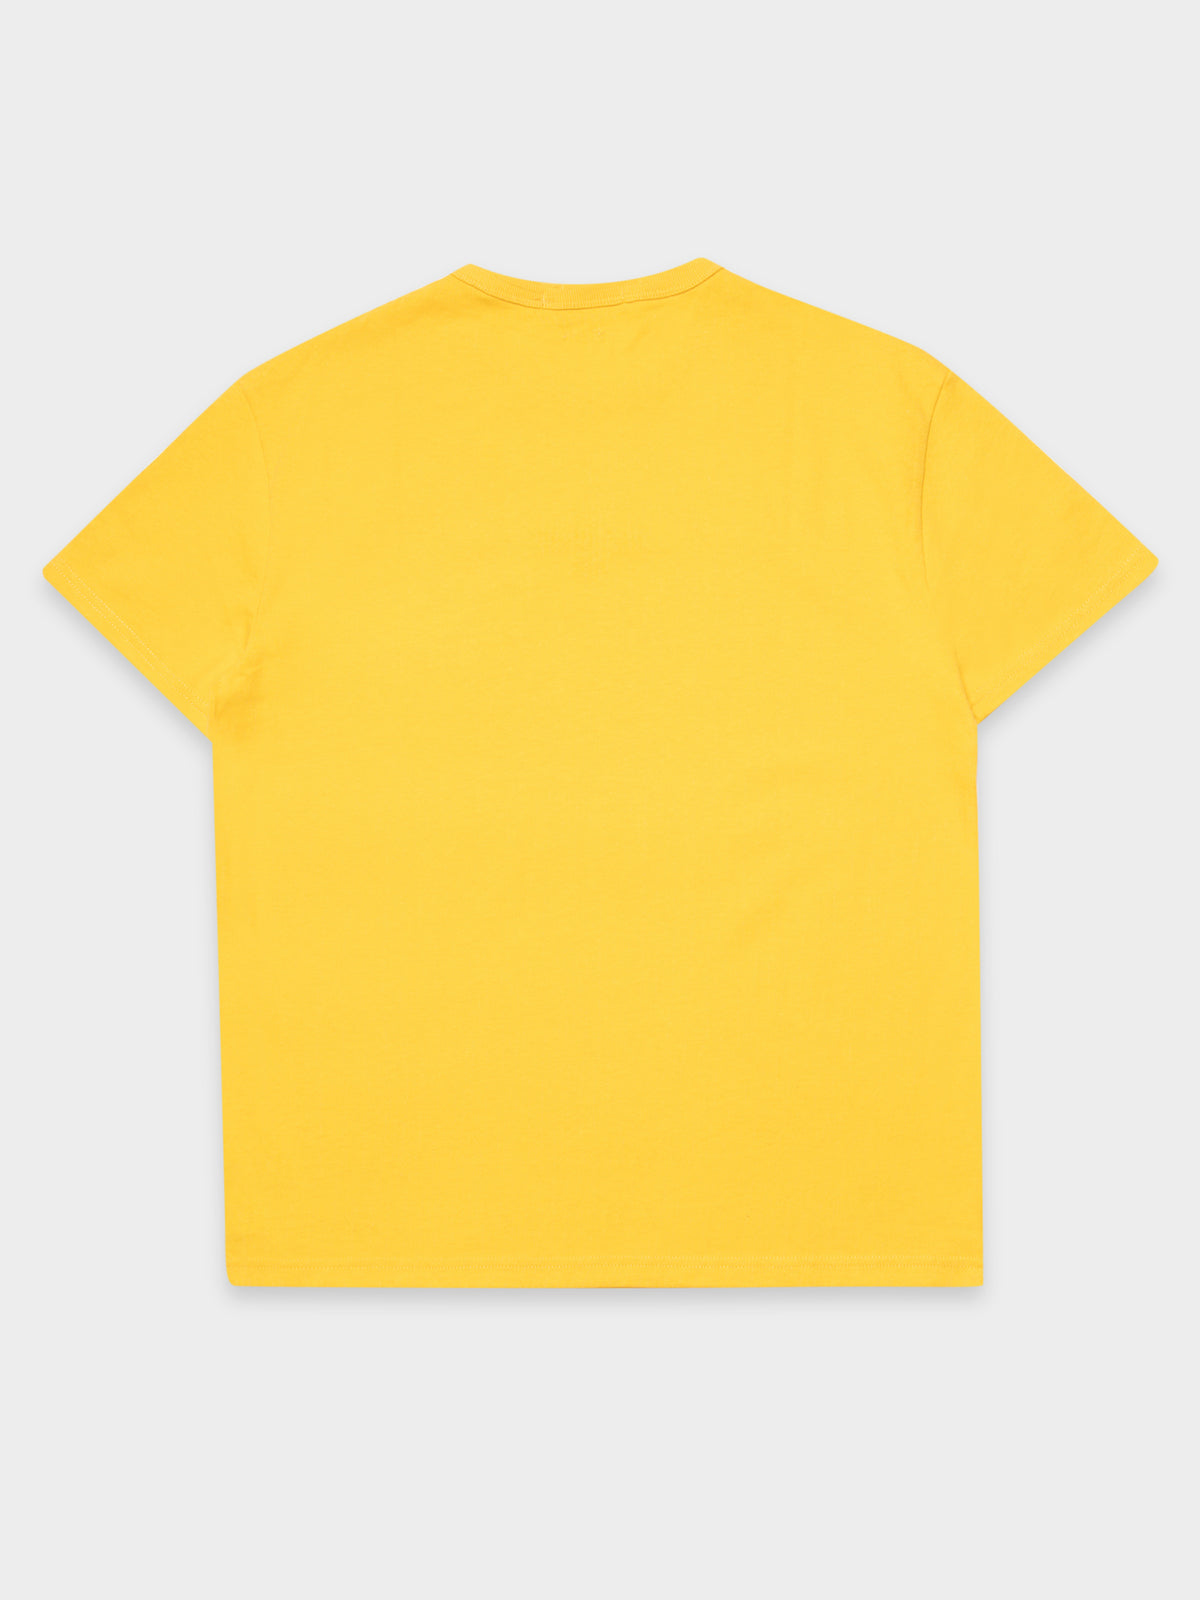 Polo Sport Centre Logo T-Shirt in Chrome Yellow